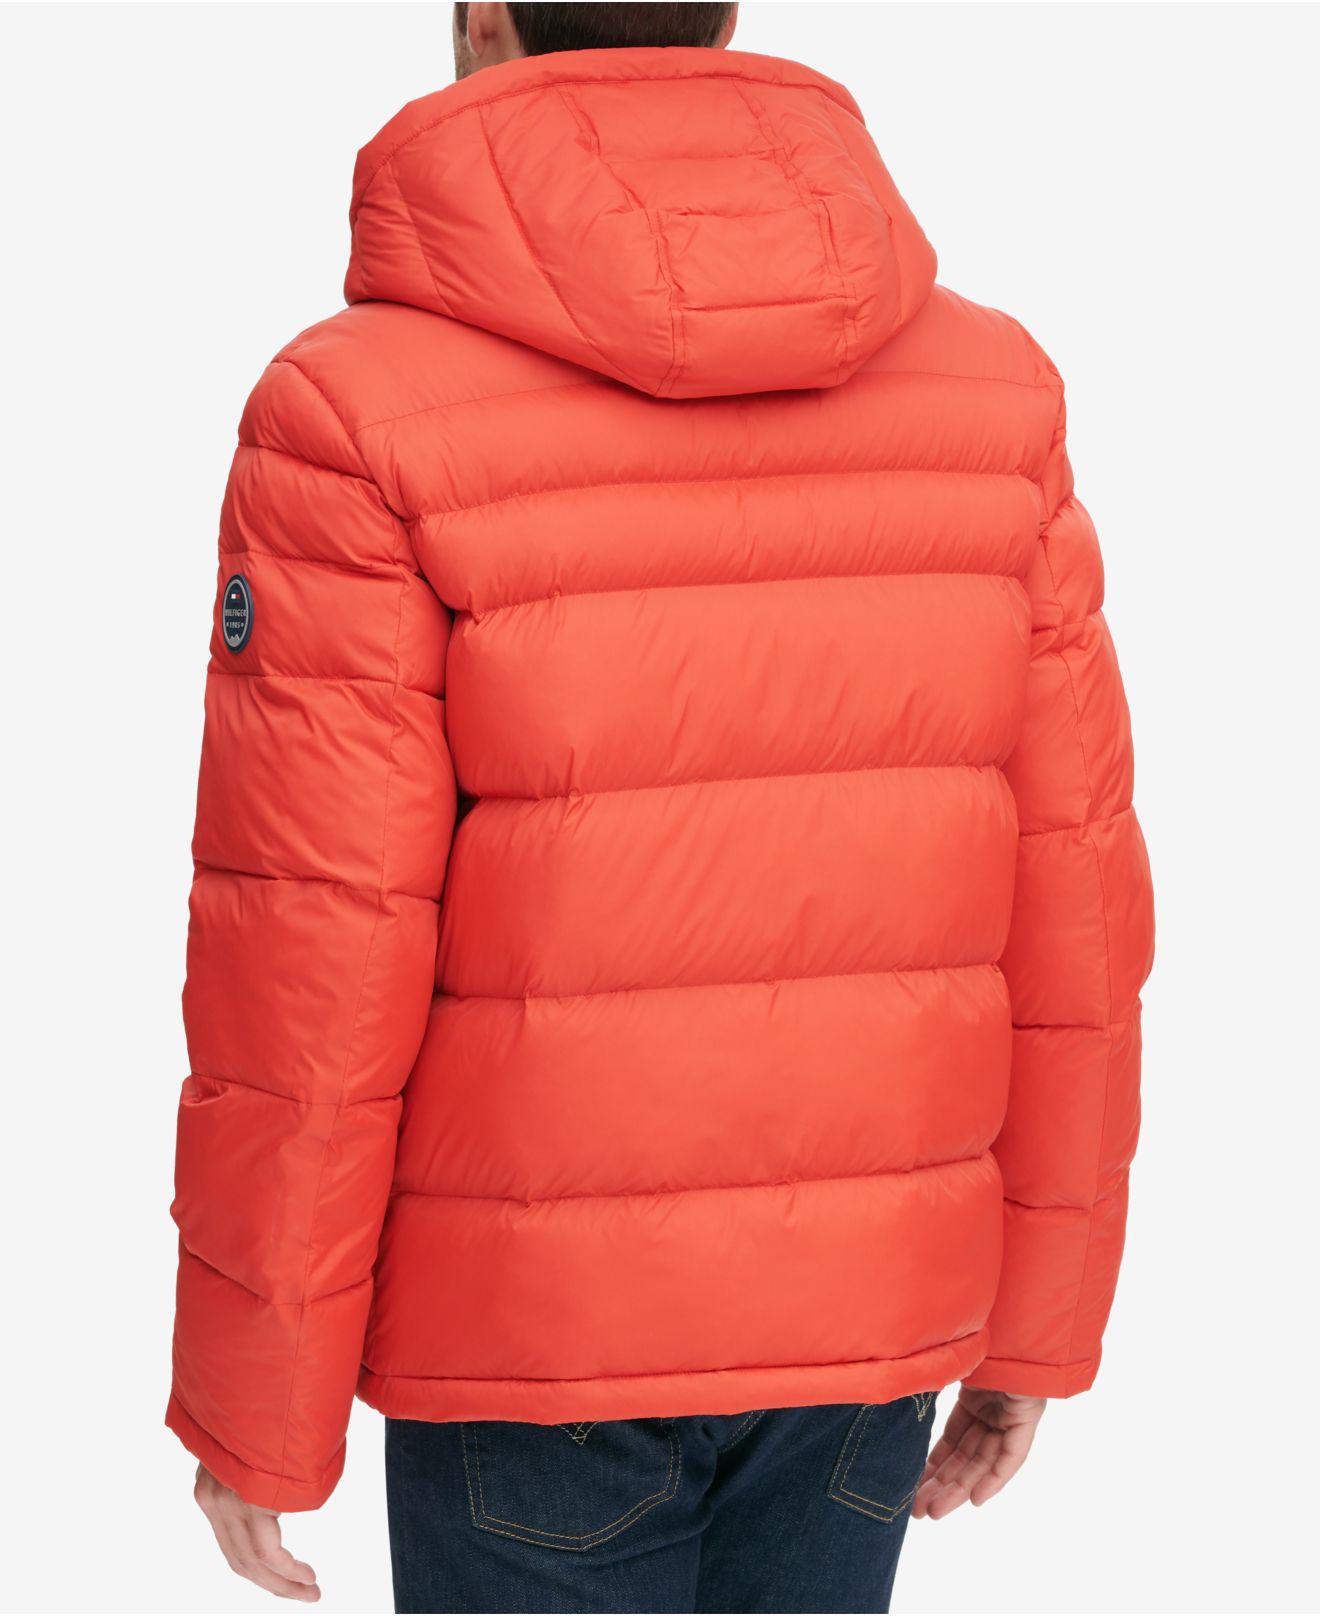 tommy hilfiger orange puffer jacket 